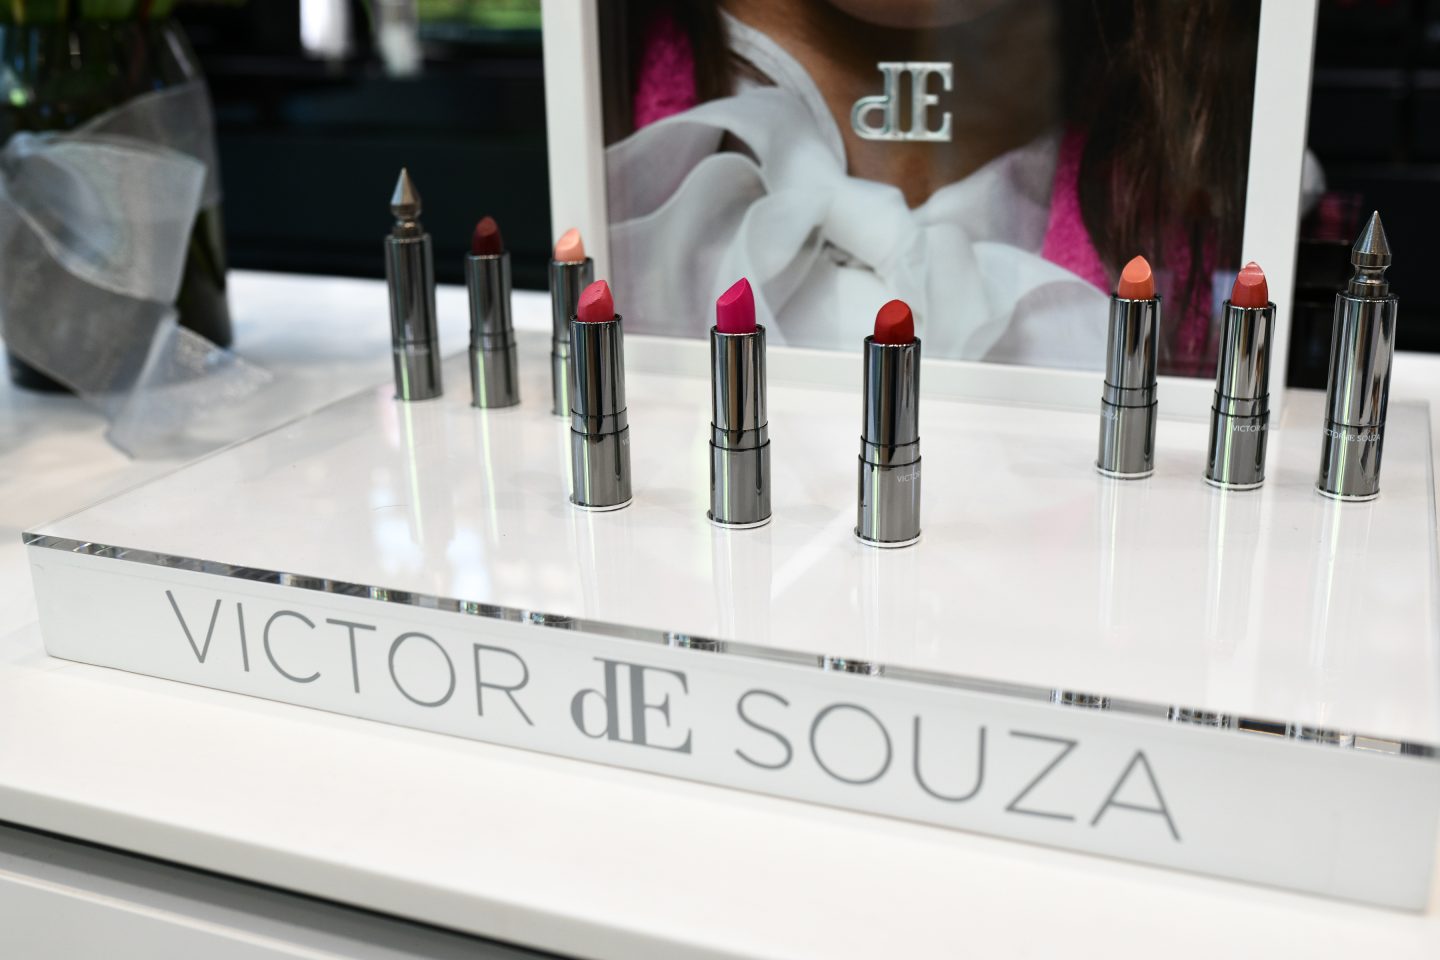 Renowned Couture Designer Victor dE Souza Launches Luxury Lipstick Line